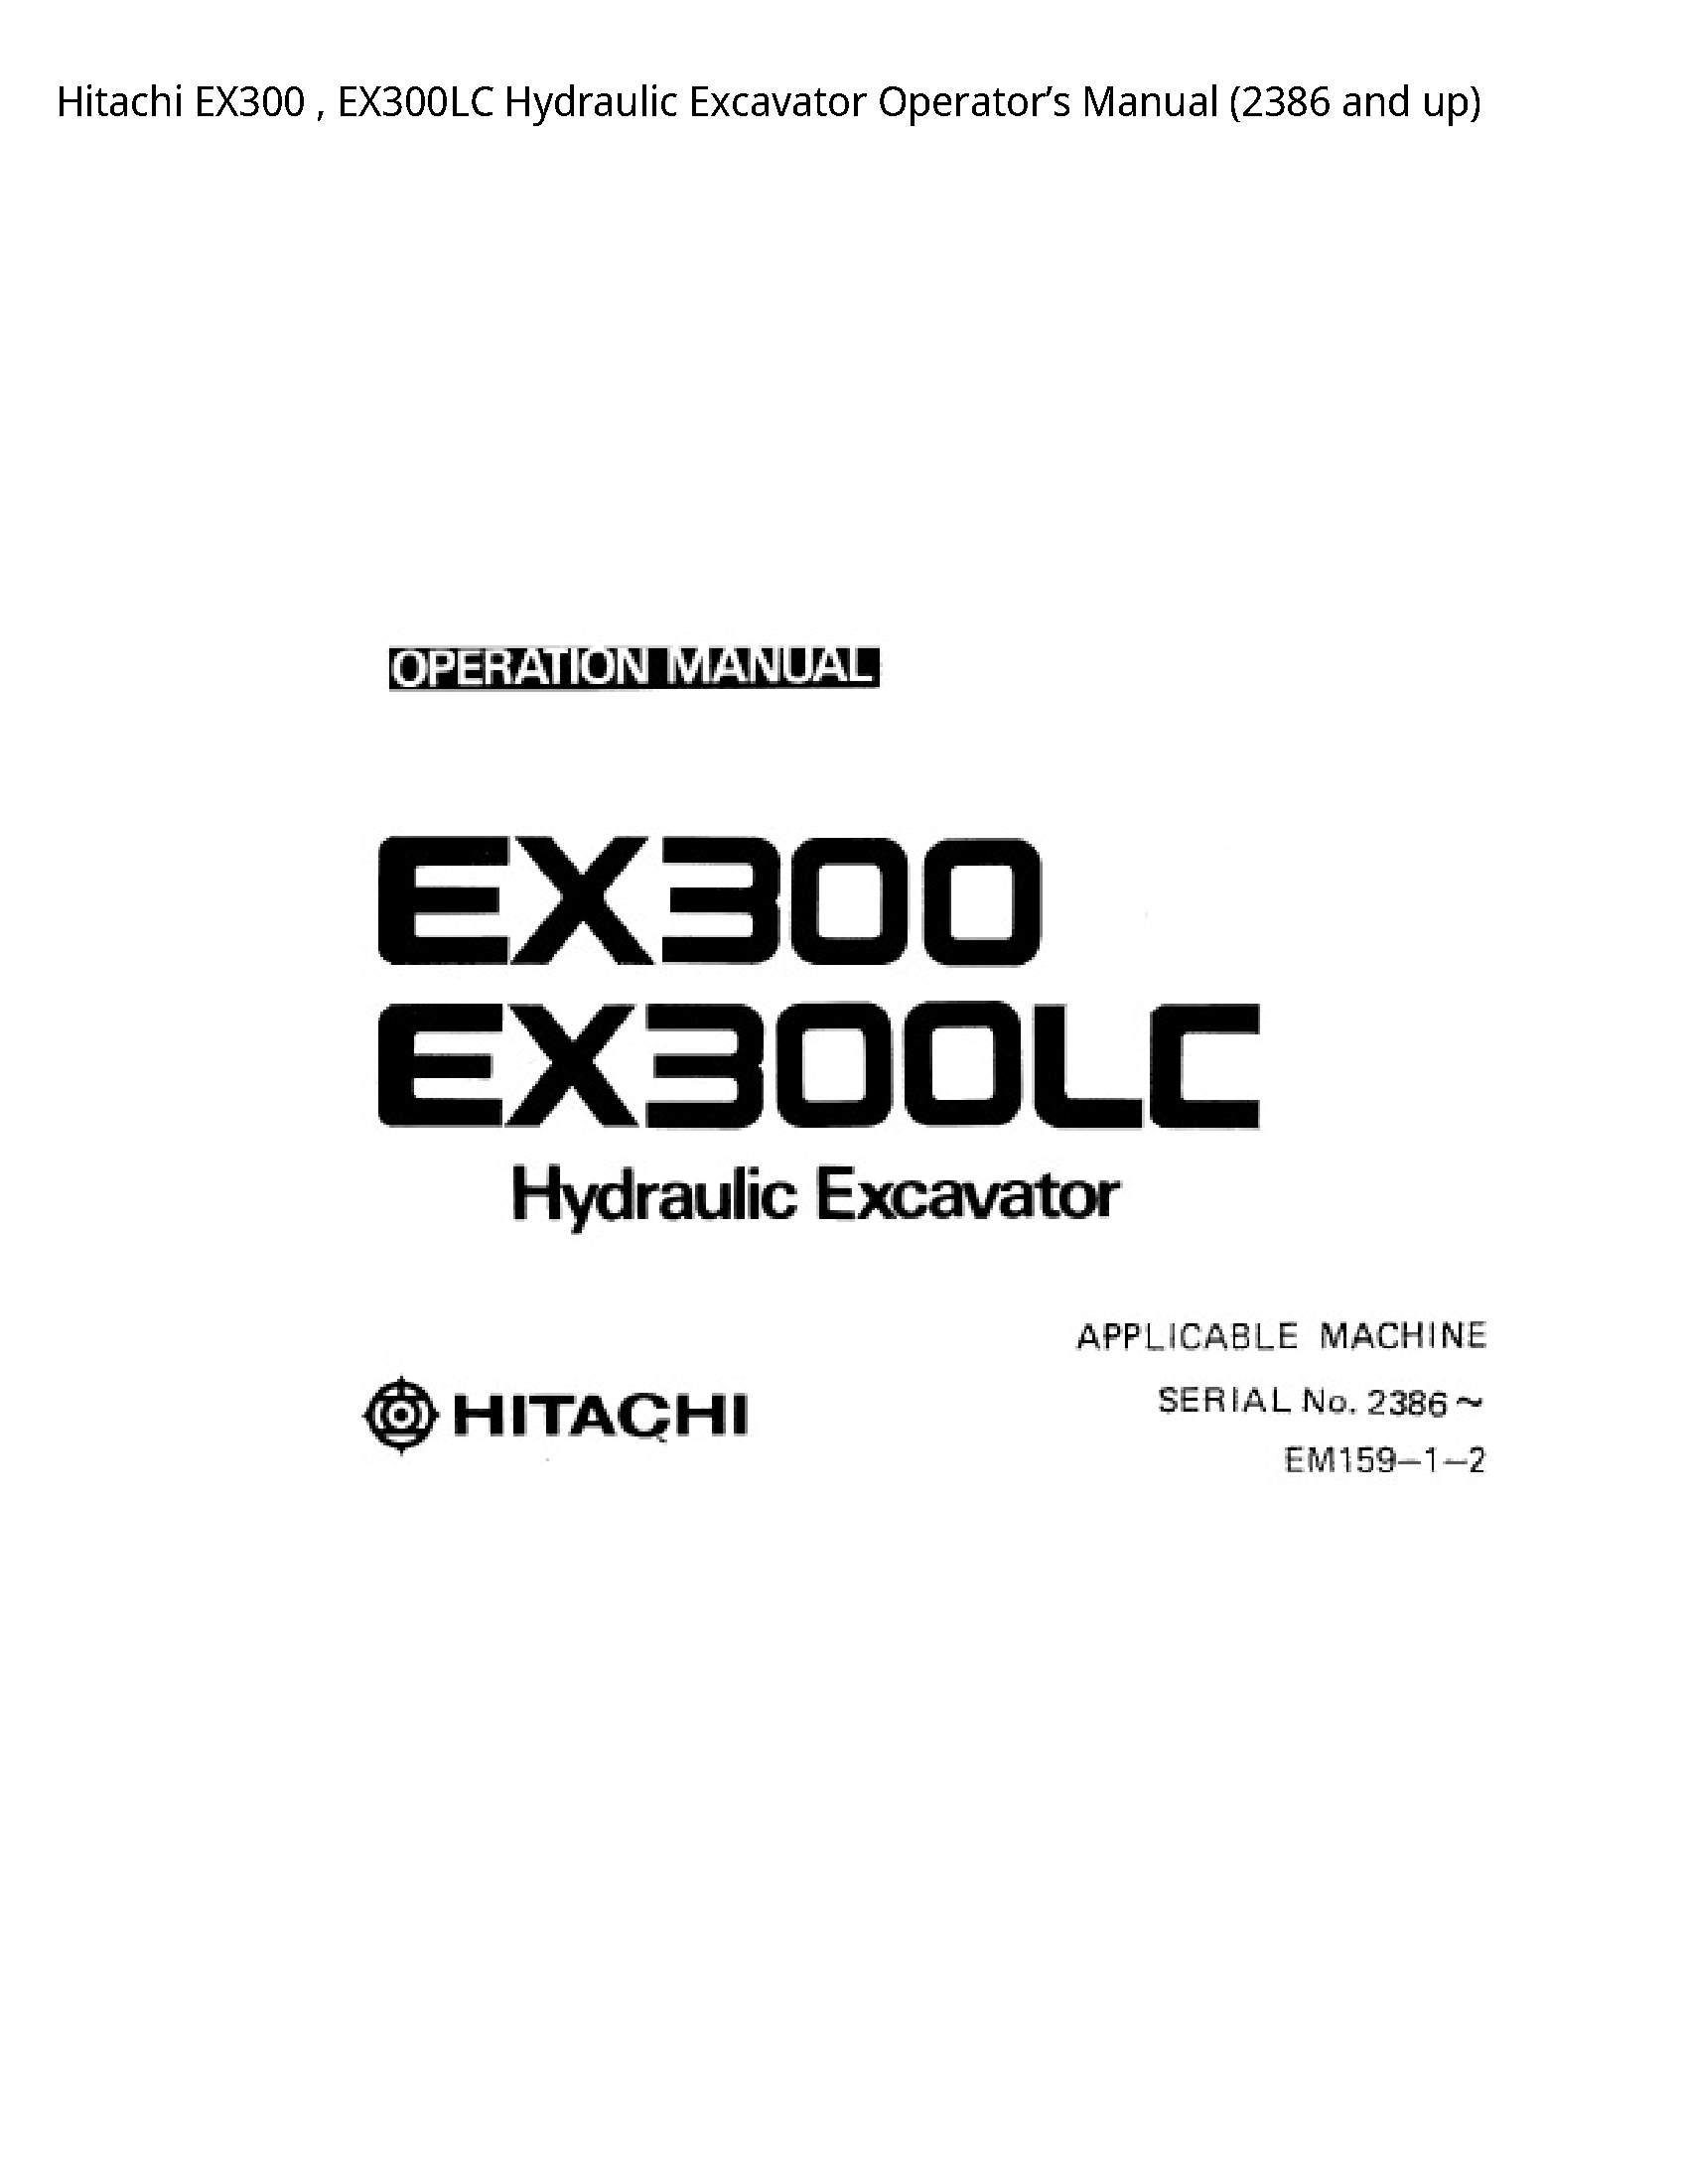 Hitachi EX300 Hydraulic Excavator Operator’s manual